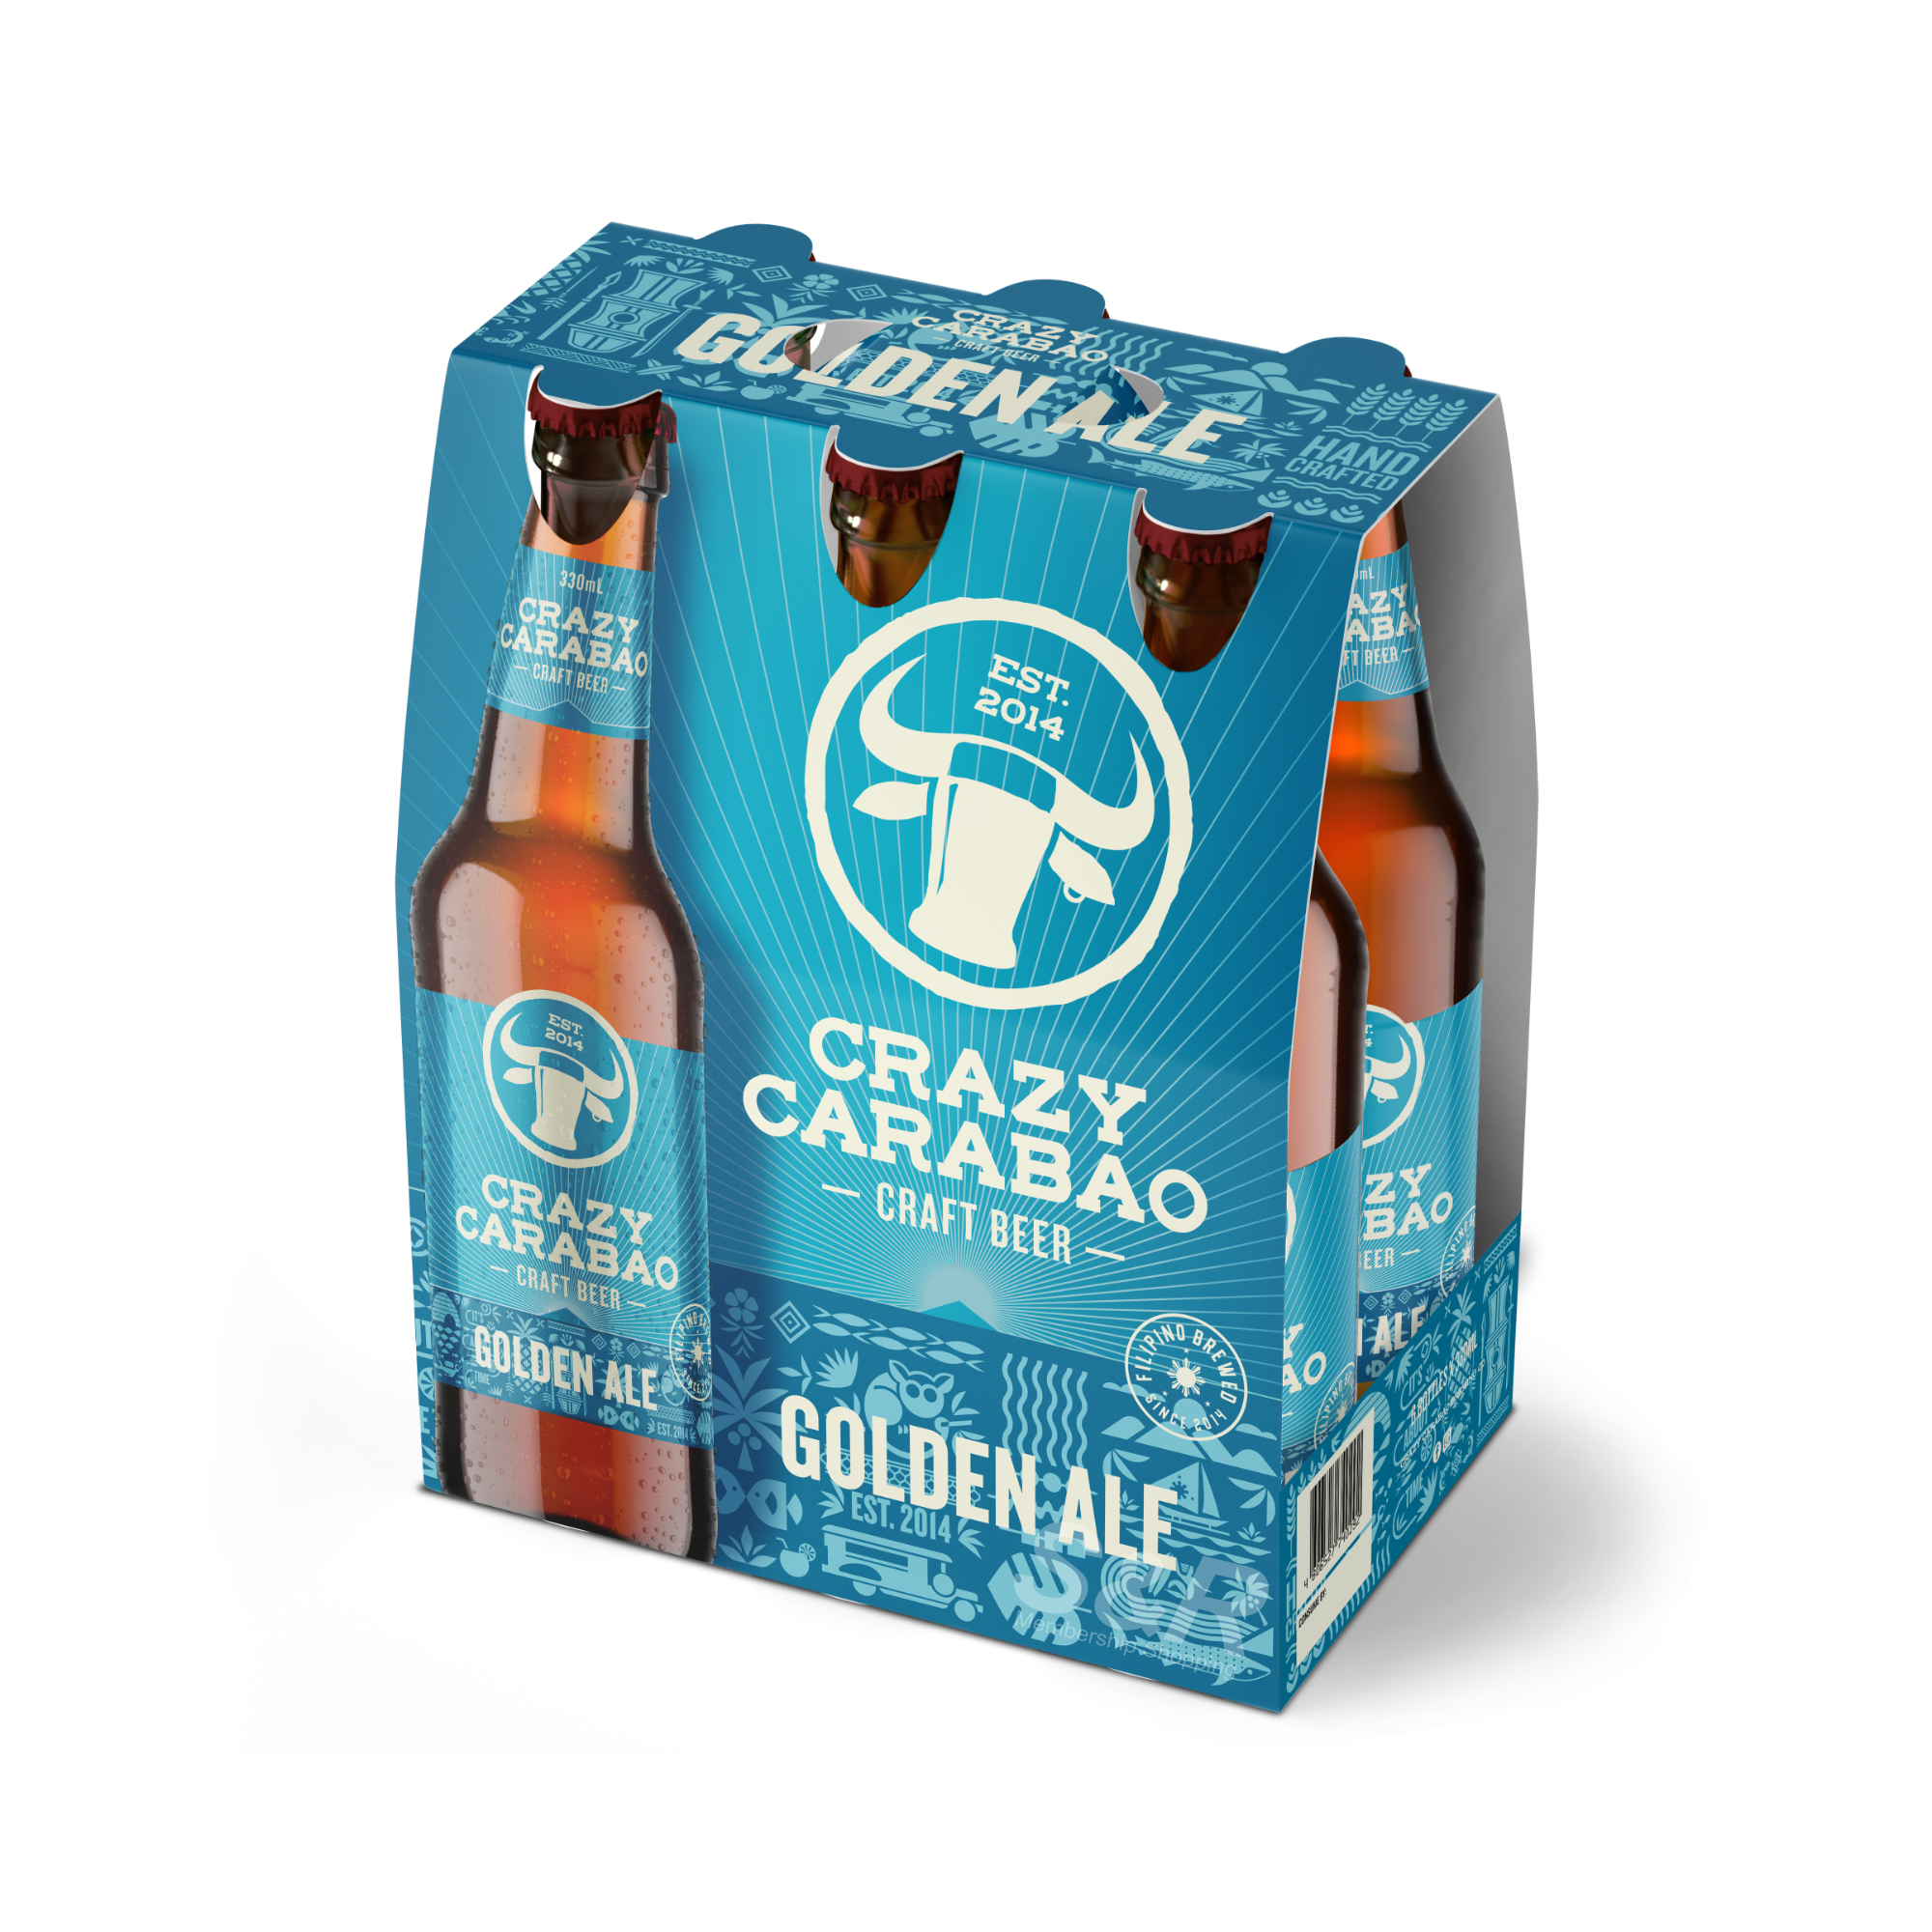 Crazy Carabao Golden Ale Craft Beer (330mL x 6pcs)